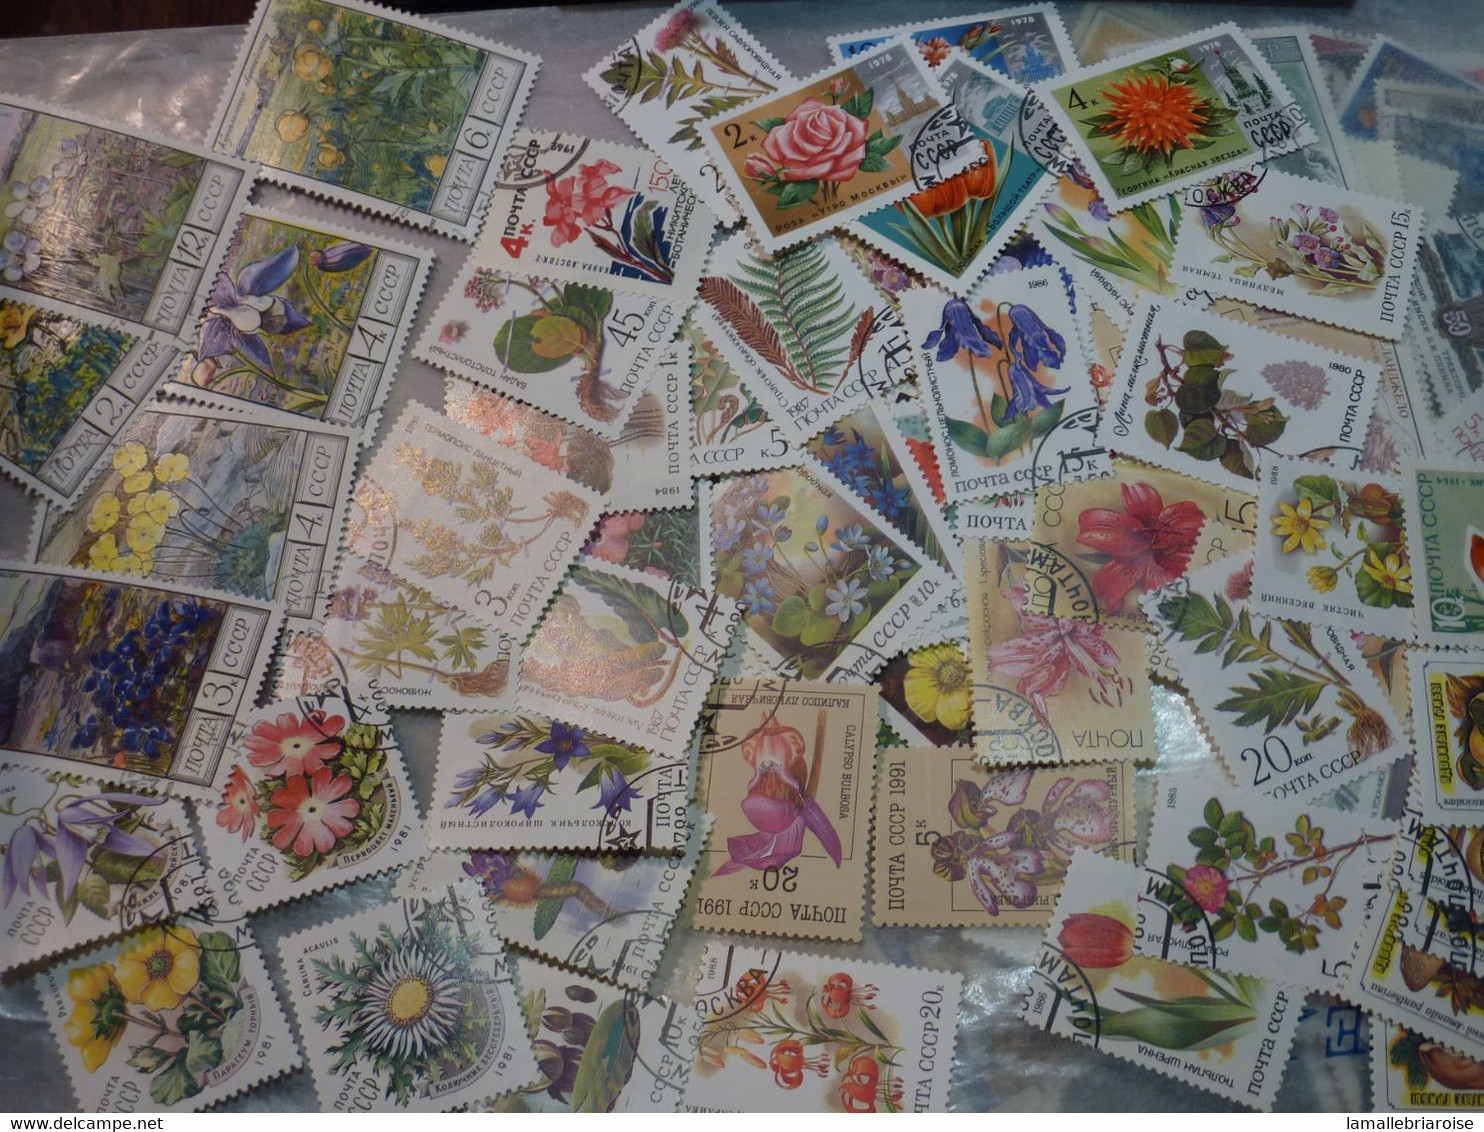 URSS, Lot de + de 1200 timbres